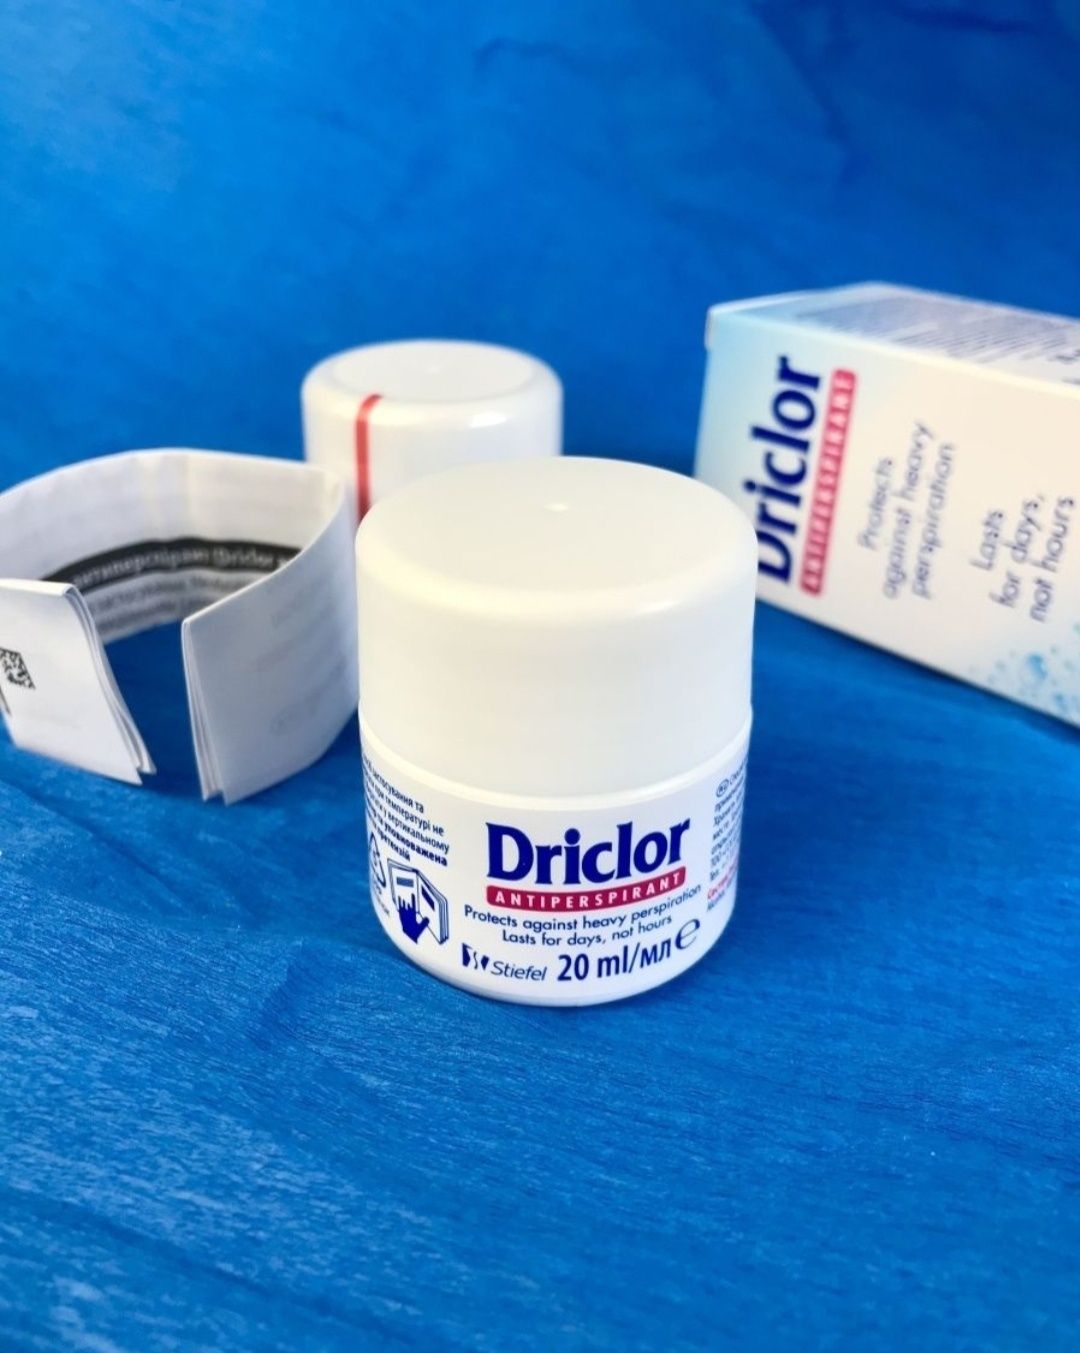 Driclor ( Дриклор) Лечение и профилактика